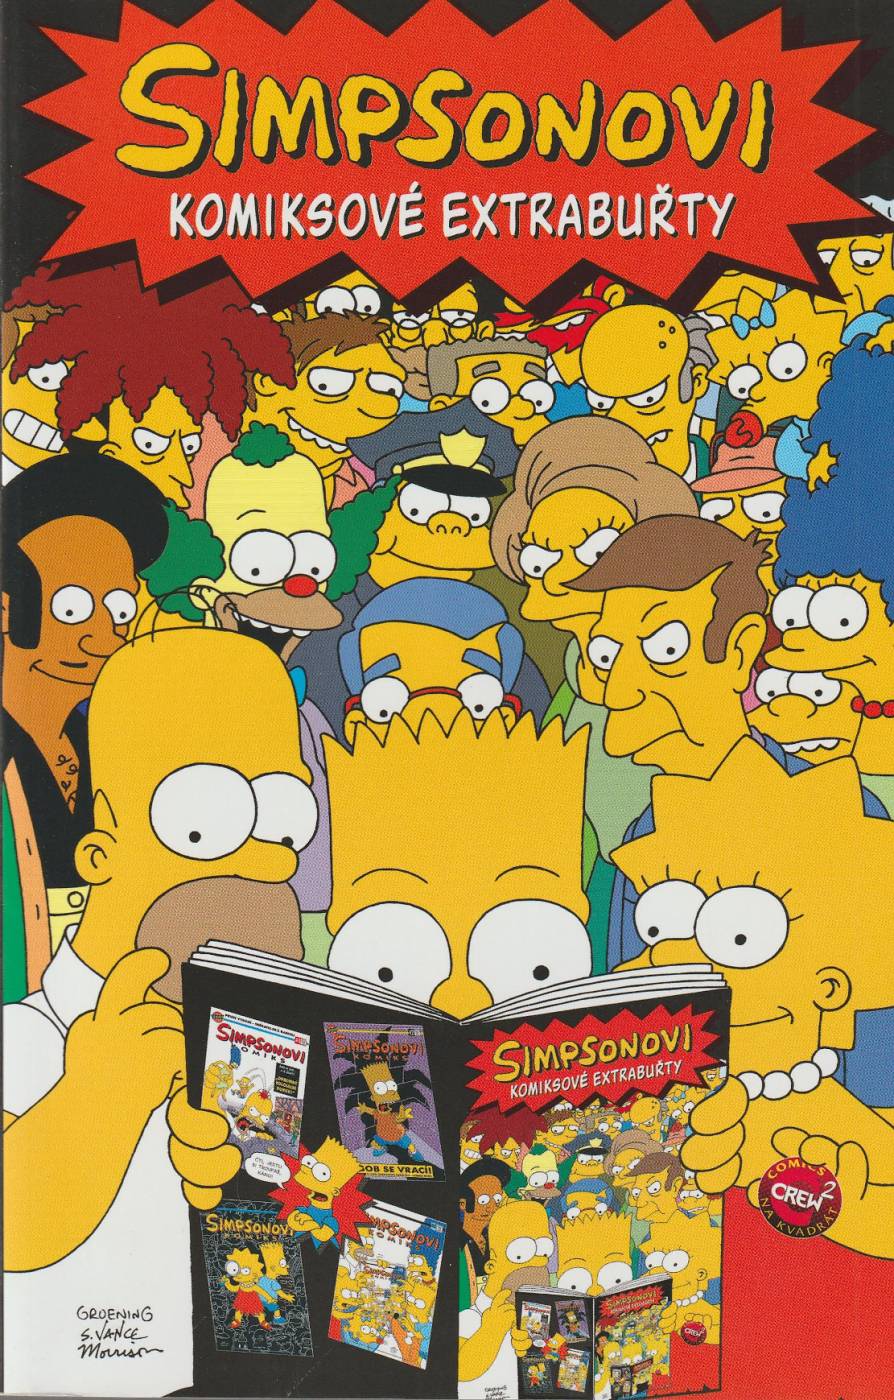 Groening, Matt / Vance, Steve – Simpsonovi, Komiksové extrabuřty